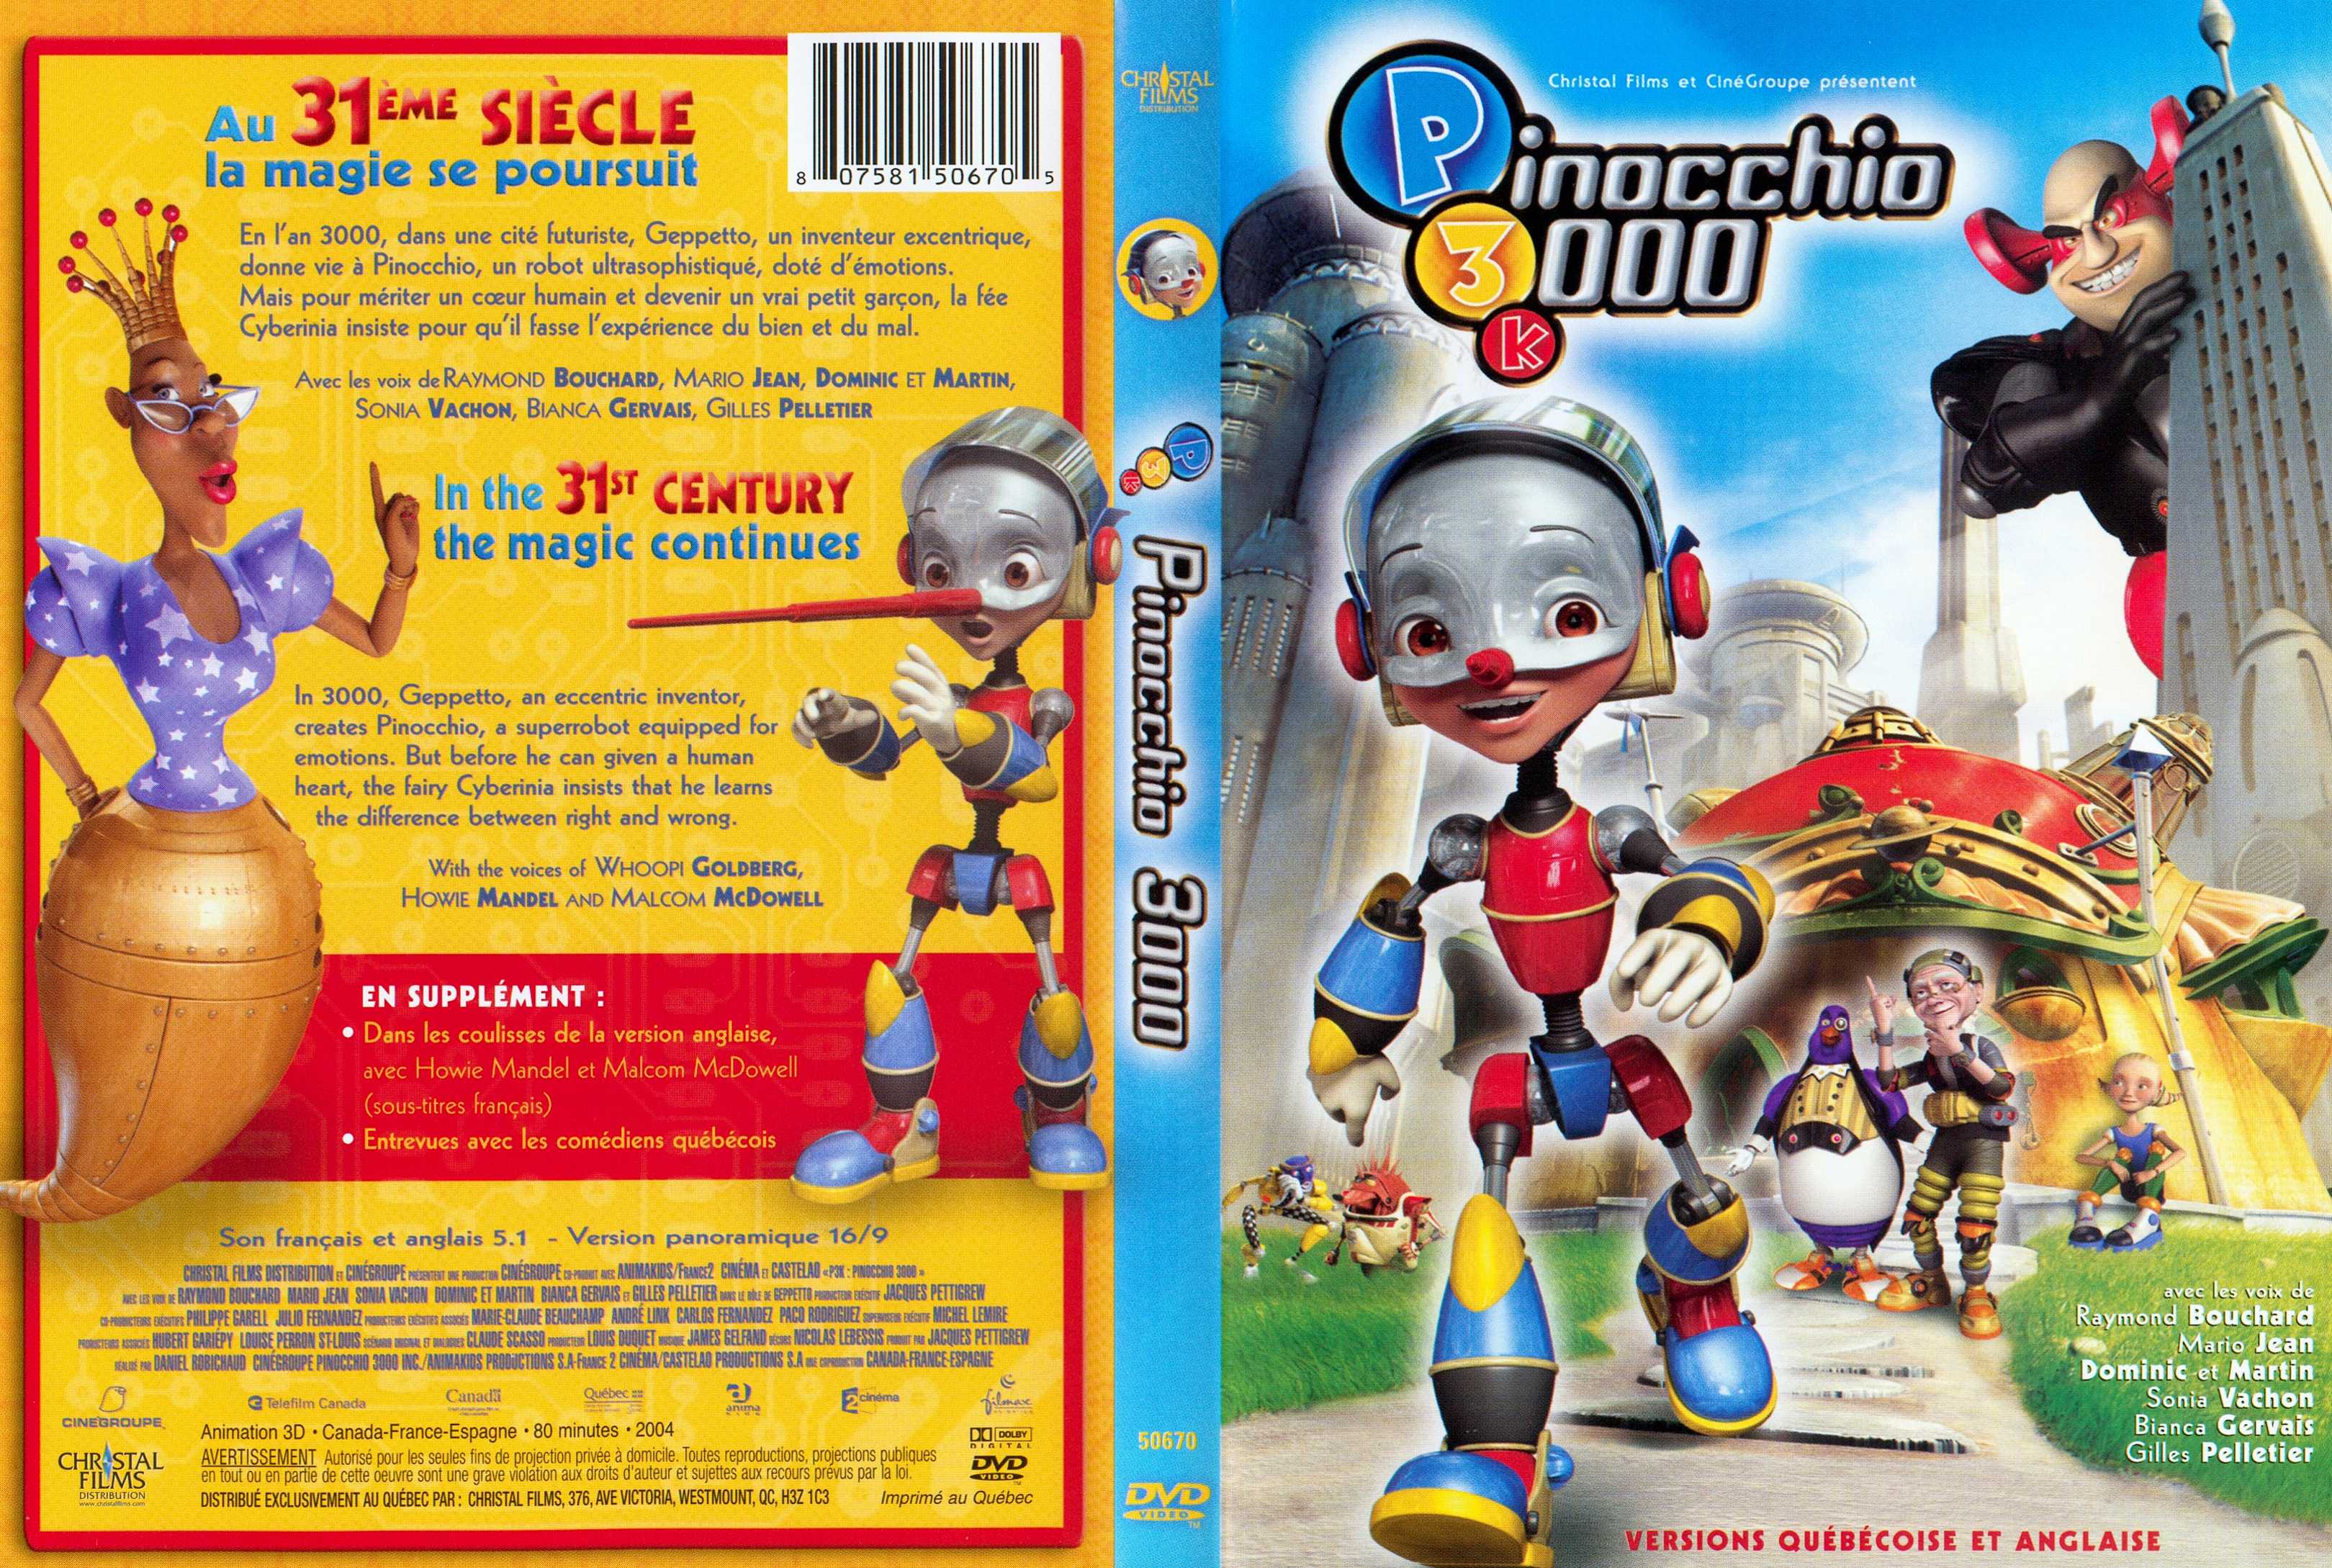 http://www.cinemapassion.com/covers_temp/covers/Pinocchio_3000_K-11575916052006.jpg